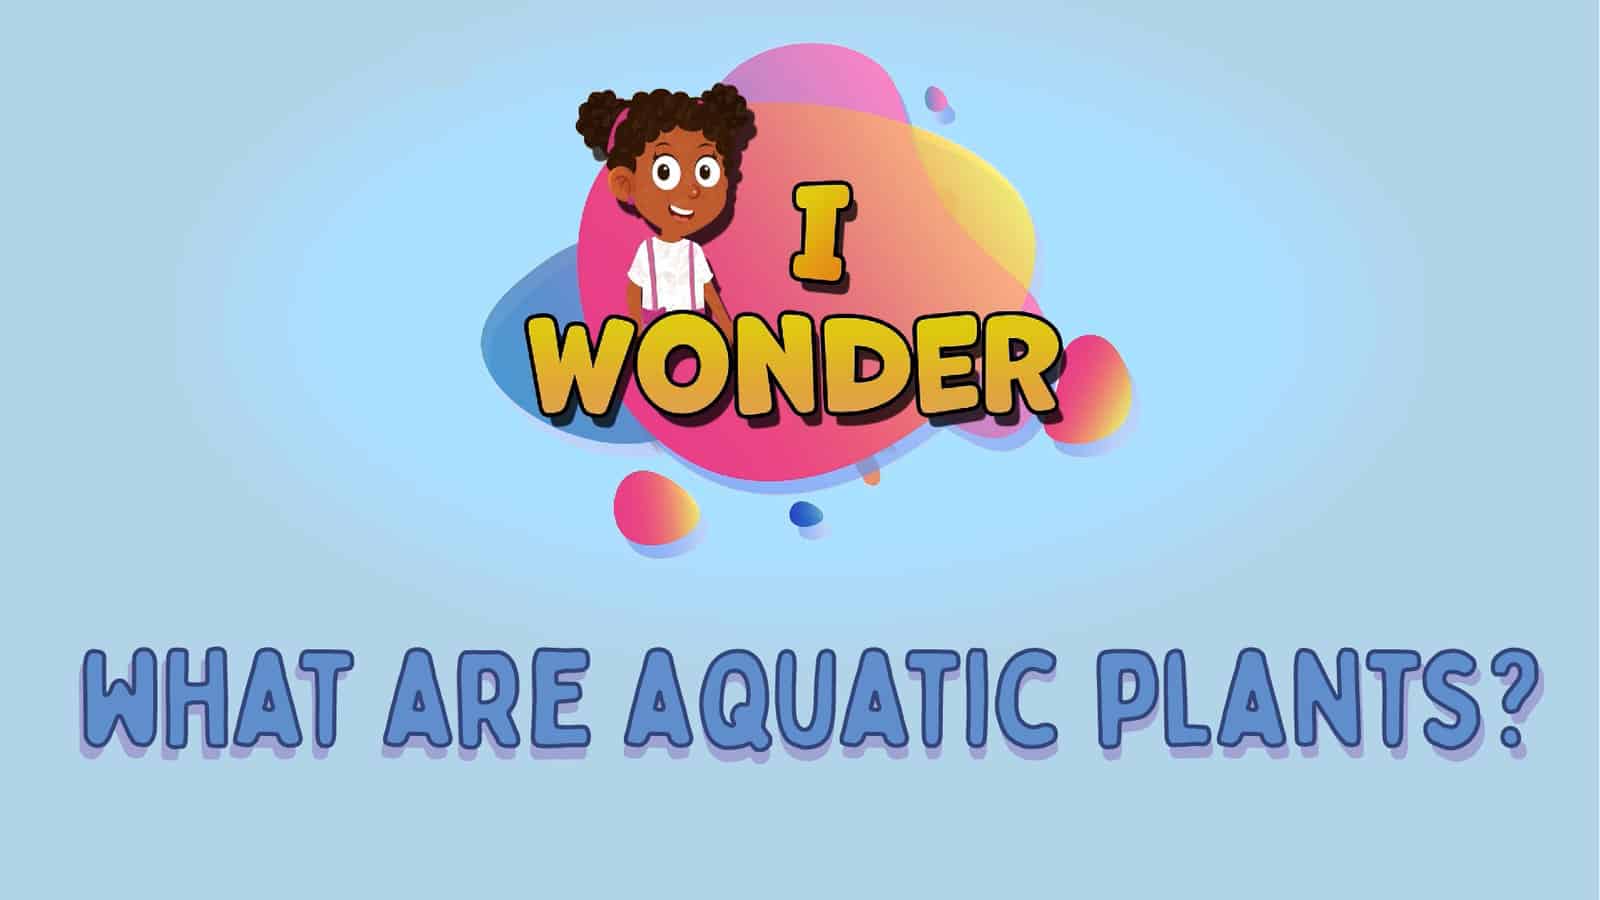 What Are Aquatic Plants?